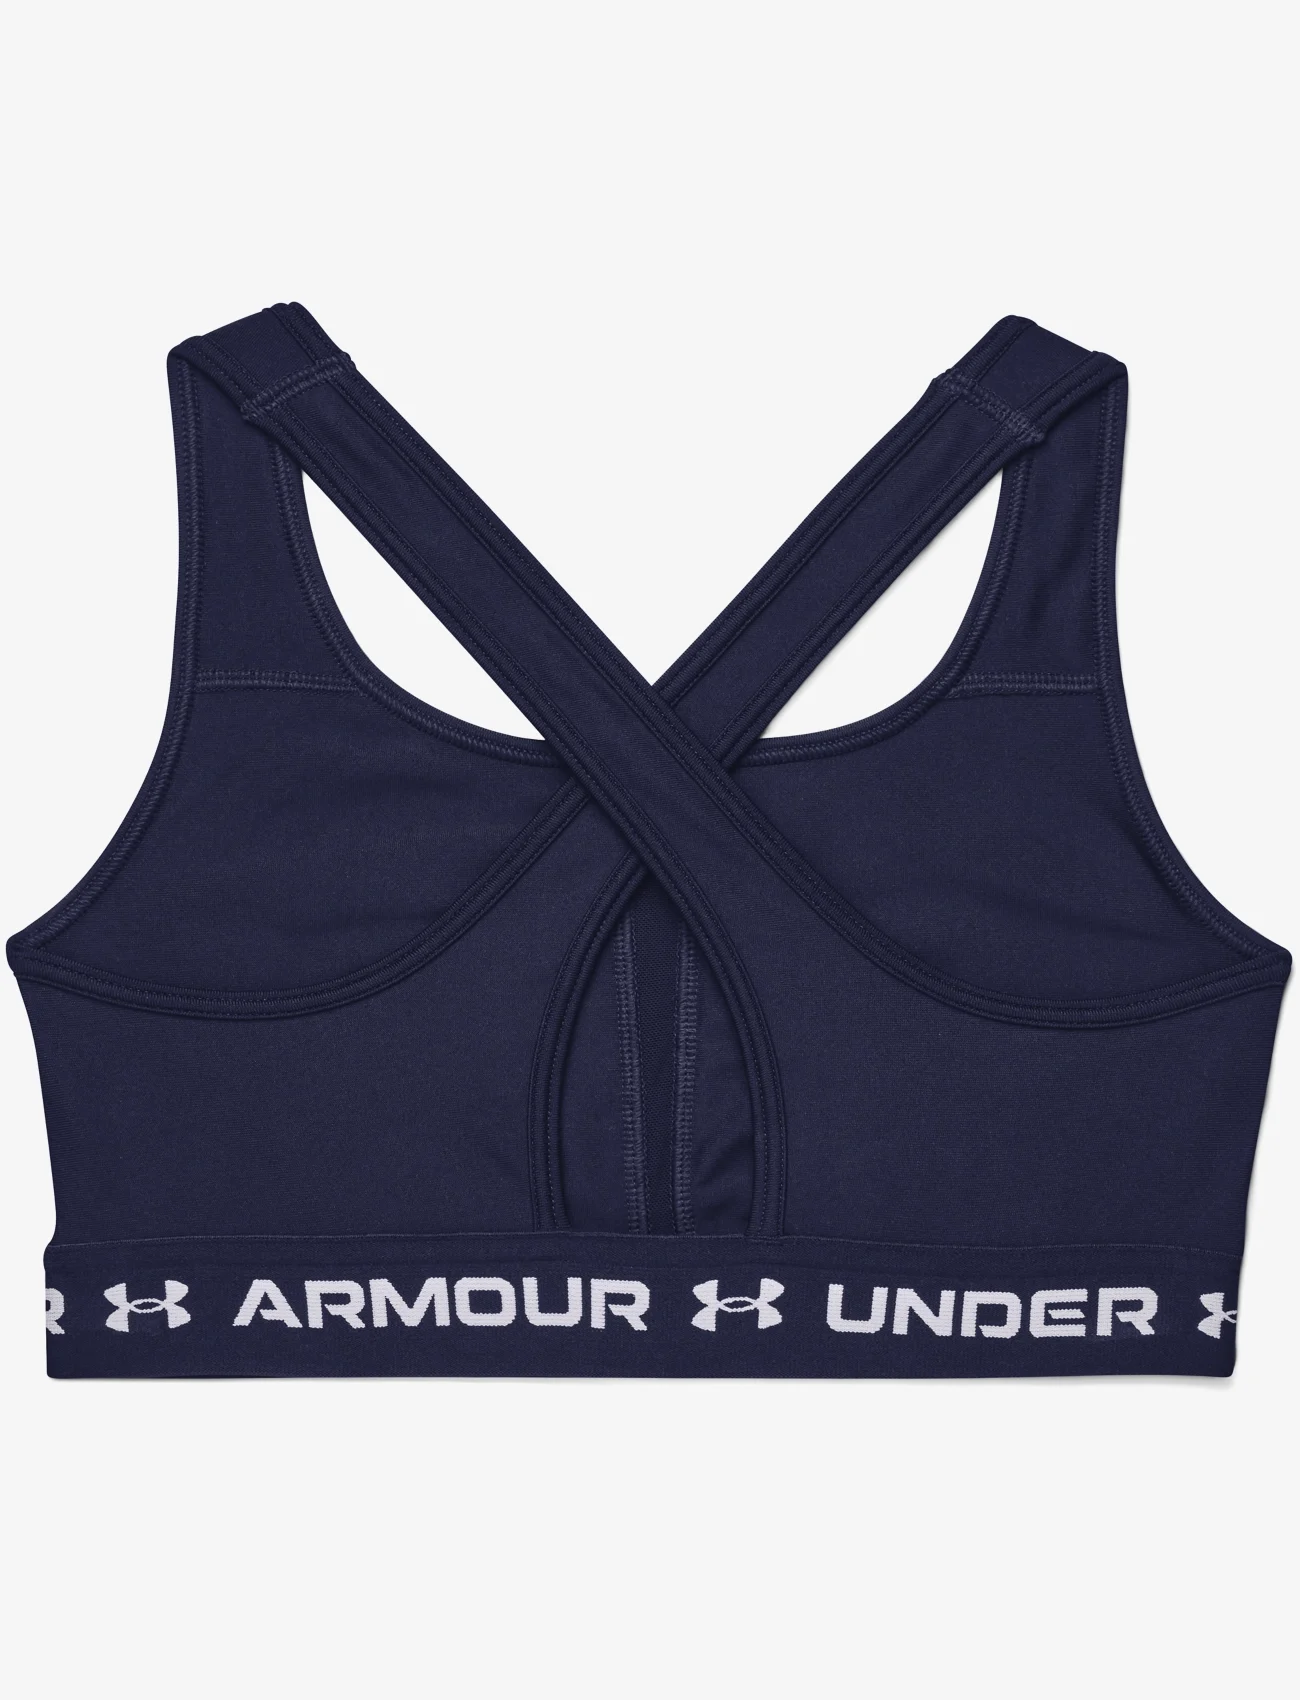 Under Armour - Crossback Mid Bra - plus size - blue - 1